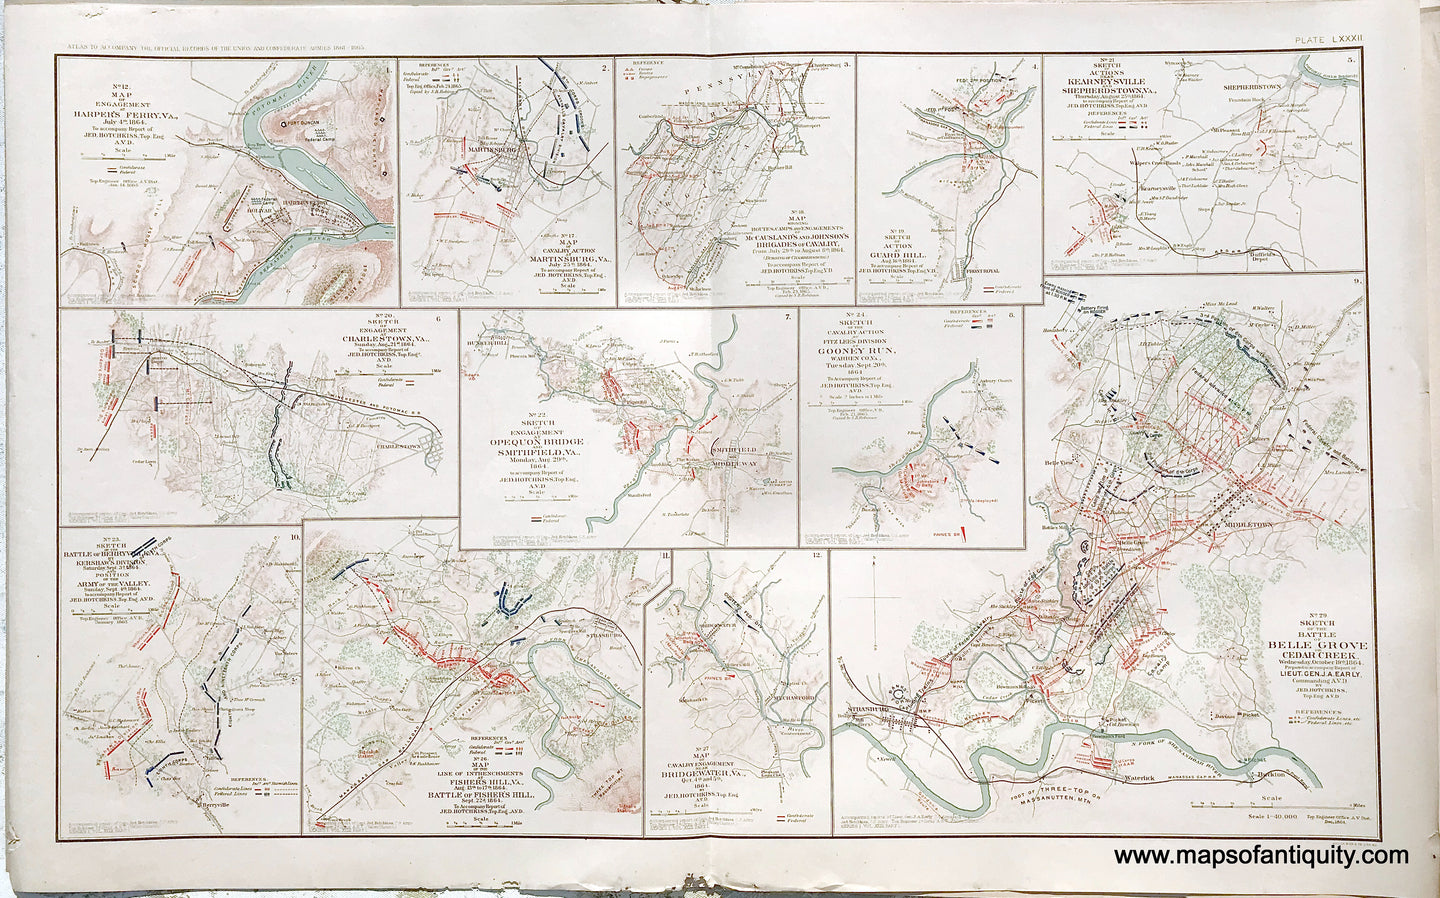 Antique-Lithograph-Print-Plate-82.-Engagement-at-Harper's-Ferry-Va.-July-4th-1864-/-Battle-of-Belle-Grove-or-Cedar-Creek-Wednesday-October-19th-1864-plus-10-smaller-maps.-1893-US-War-Dept.-Civil-War-Civil-War-1800s-19th-century-Maps-of-Antiquity